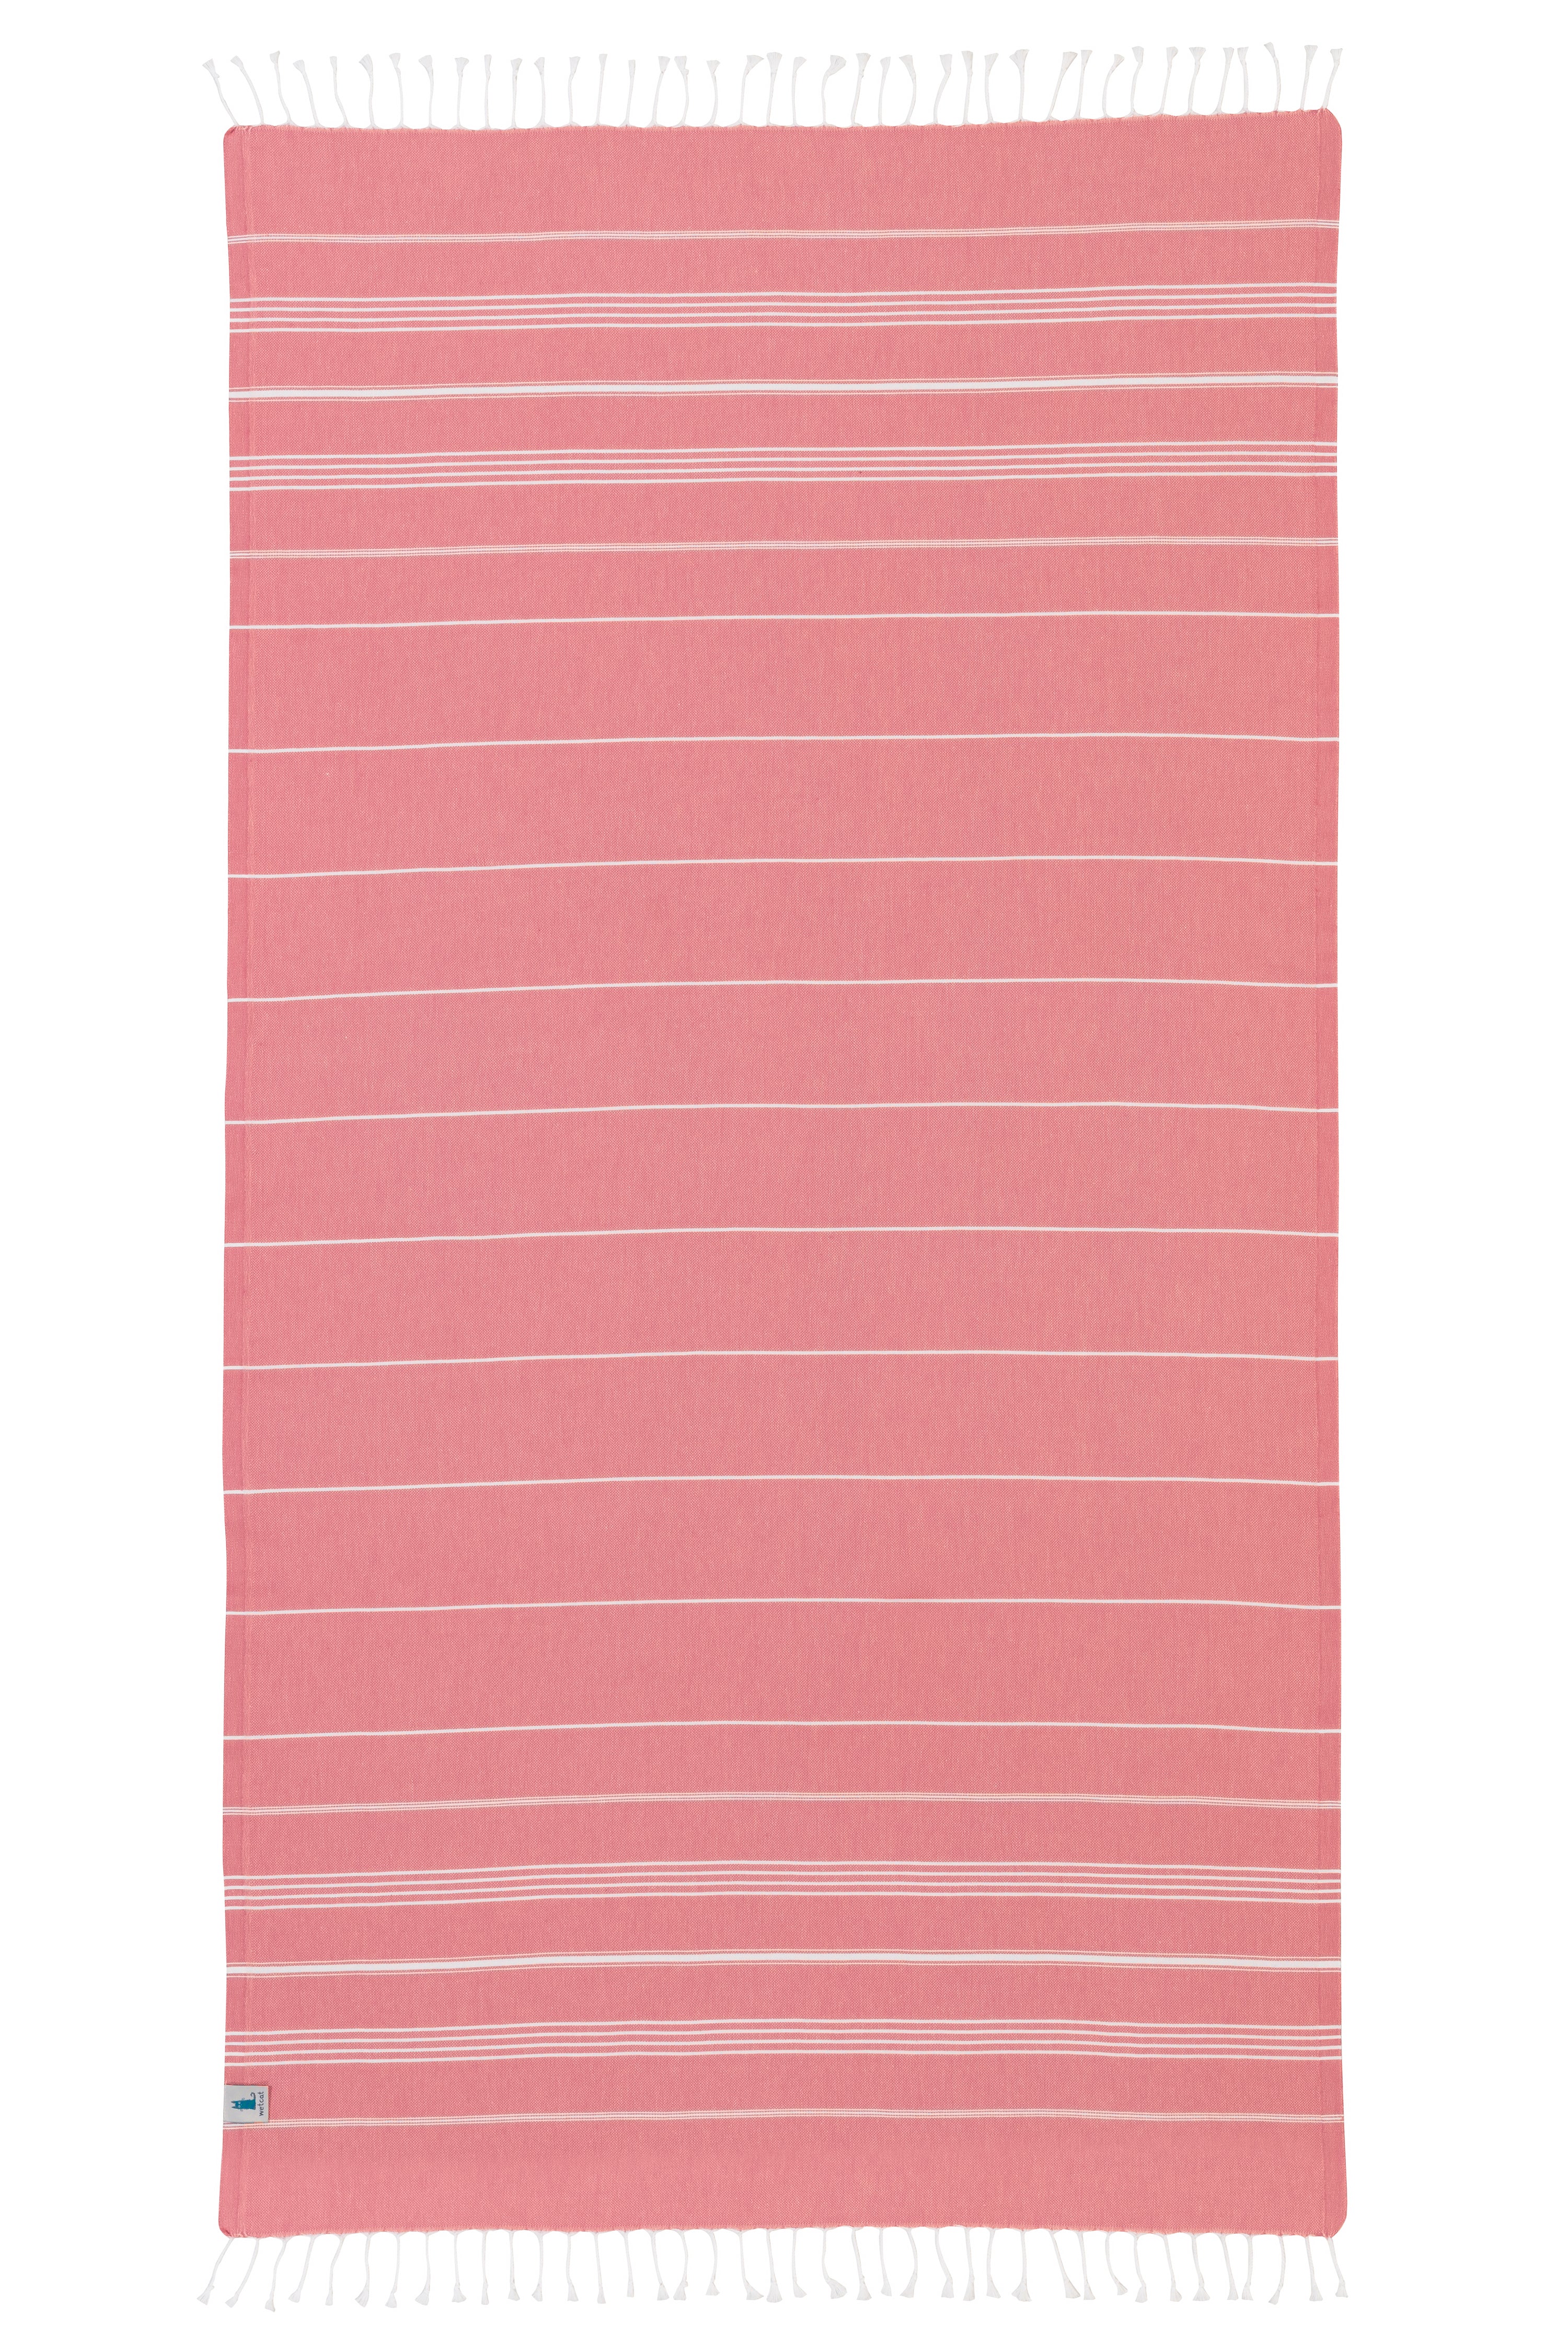 Darling Spring Coral Stripe Turkish Towel - Pink